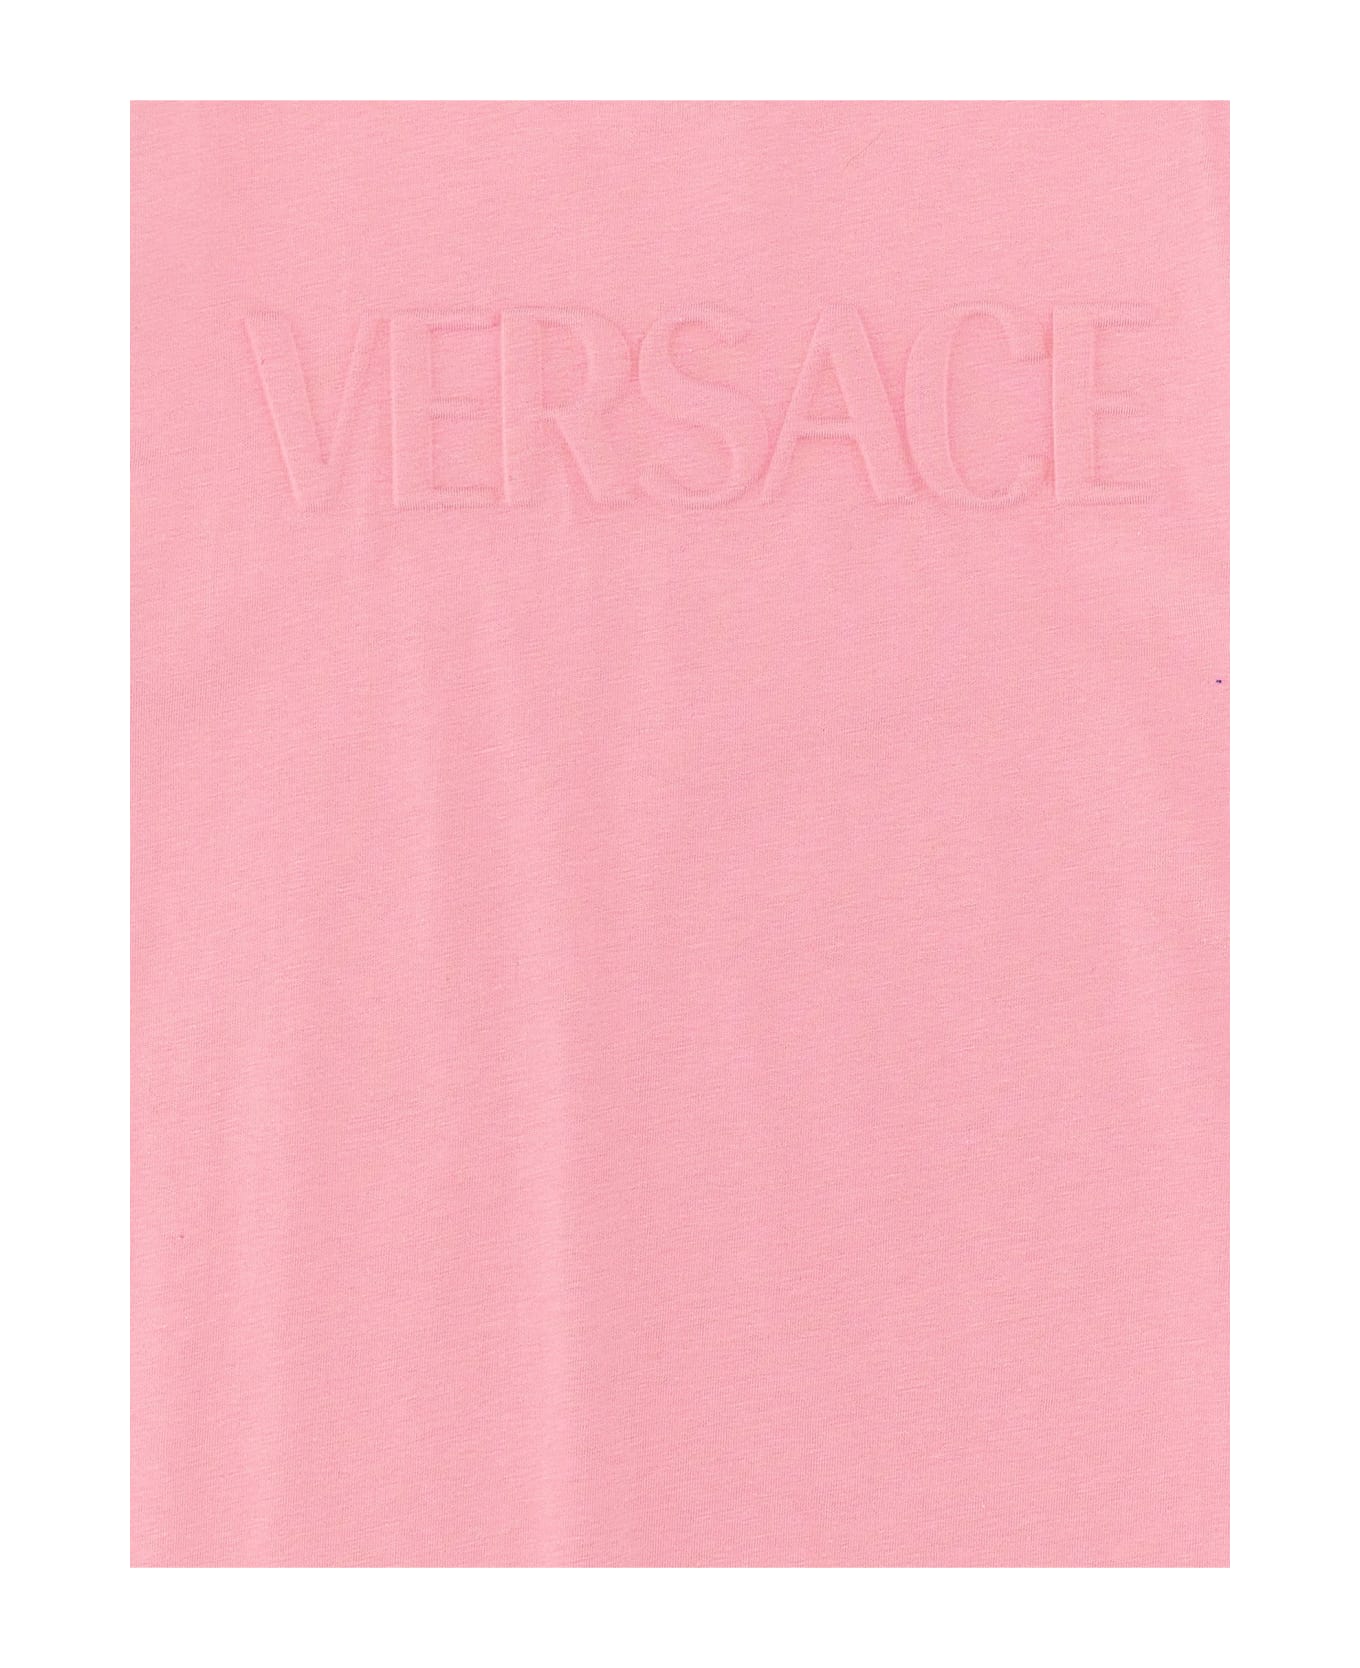 Versace Embossed Logo T-shirt - Pink